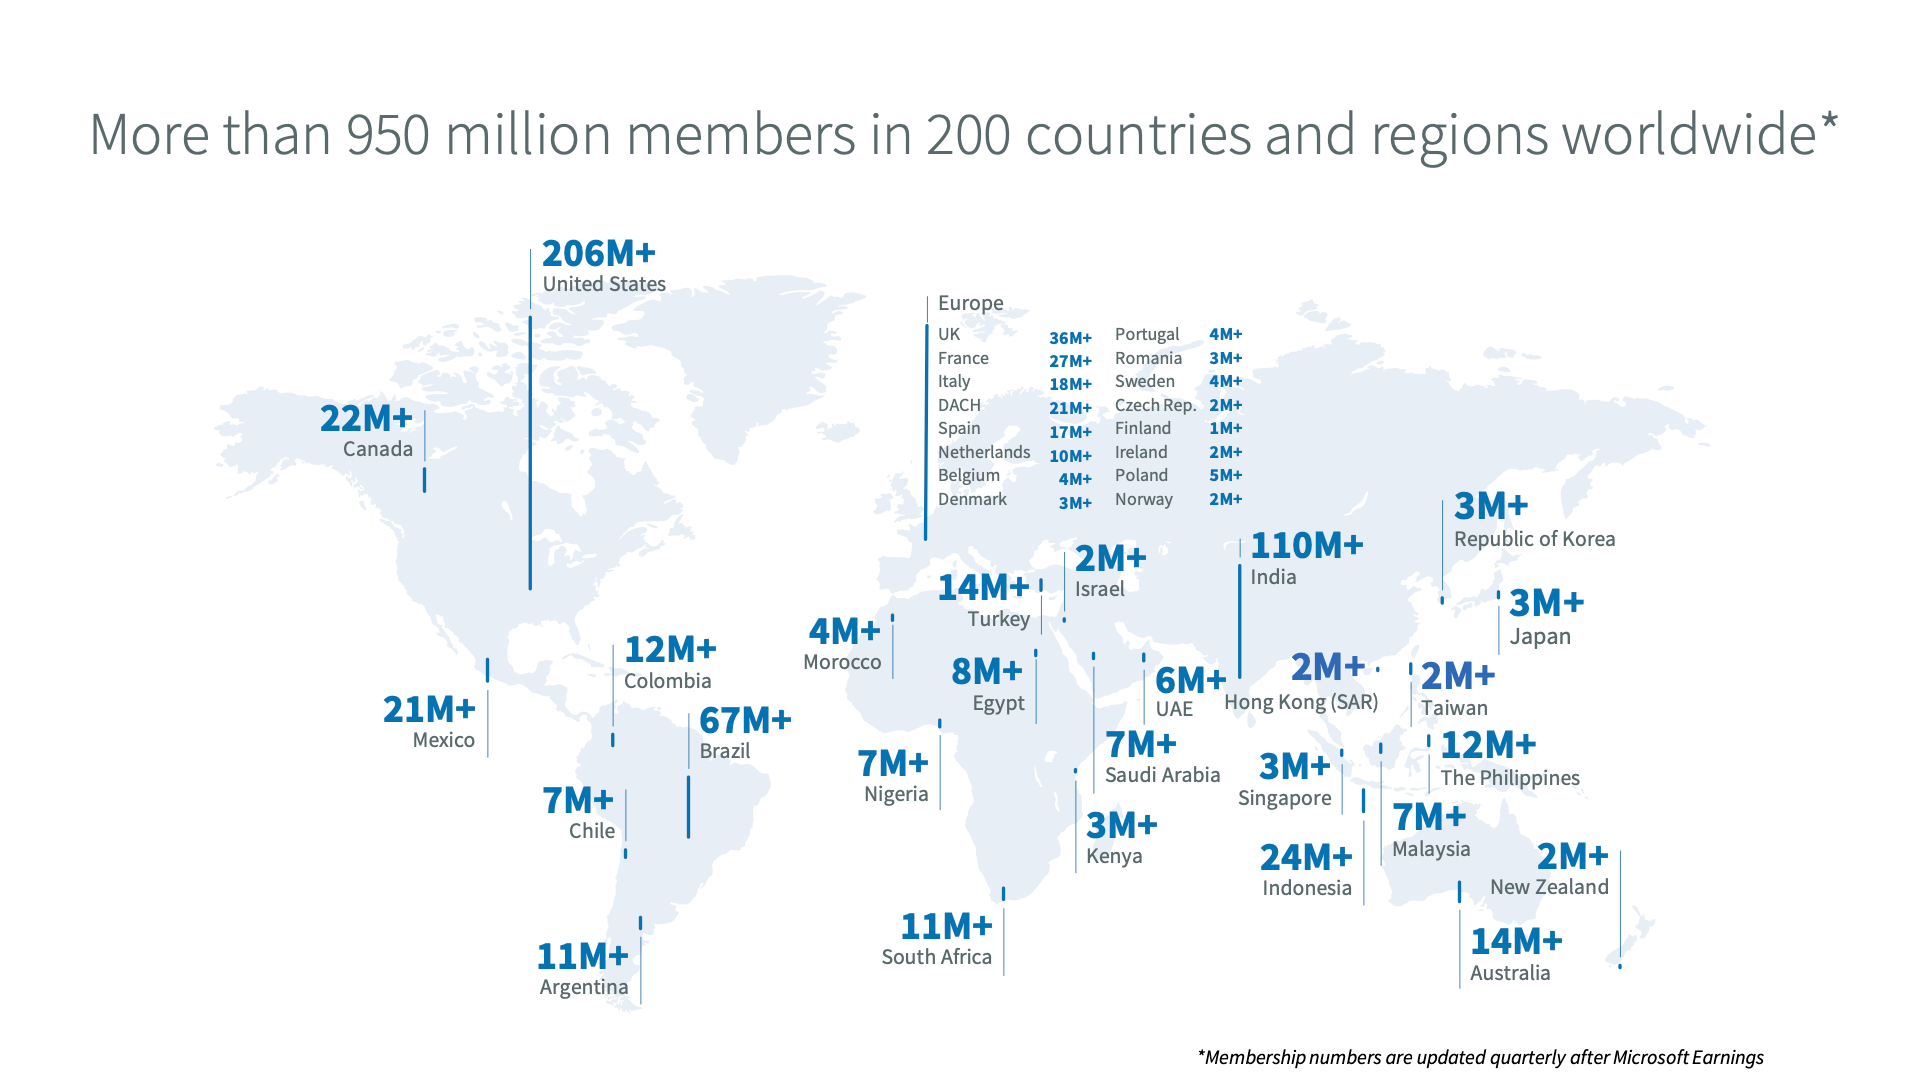 Linkedin has over 950 million members worldwide.